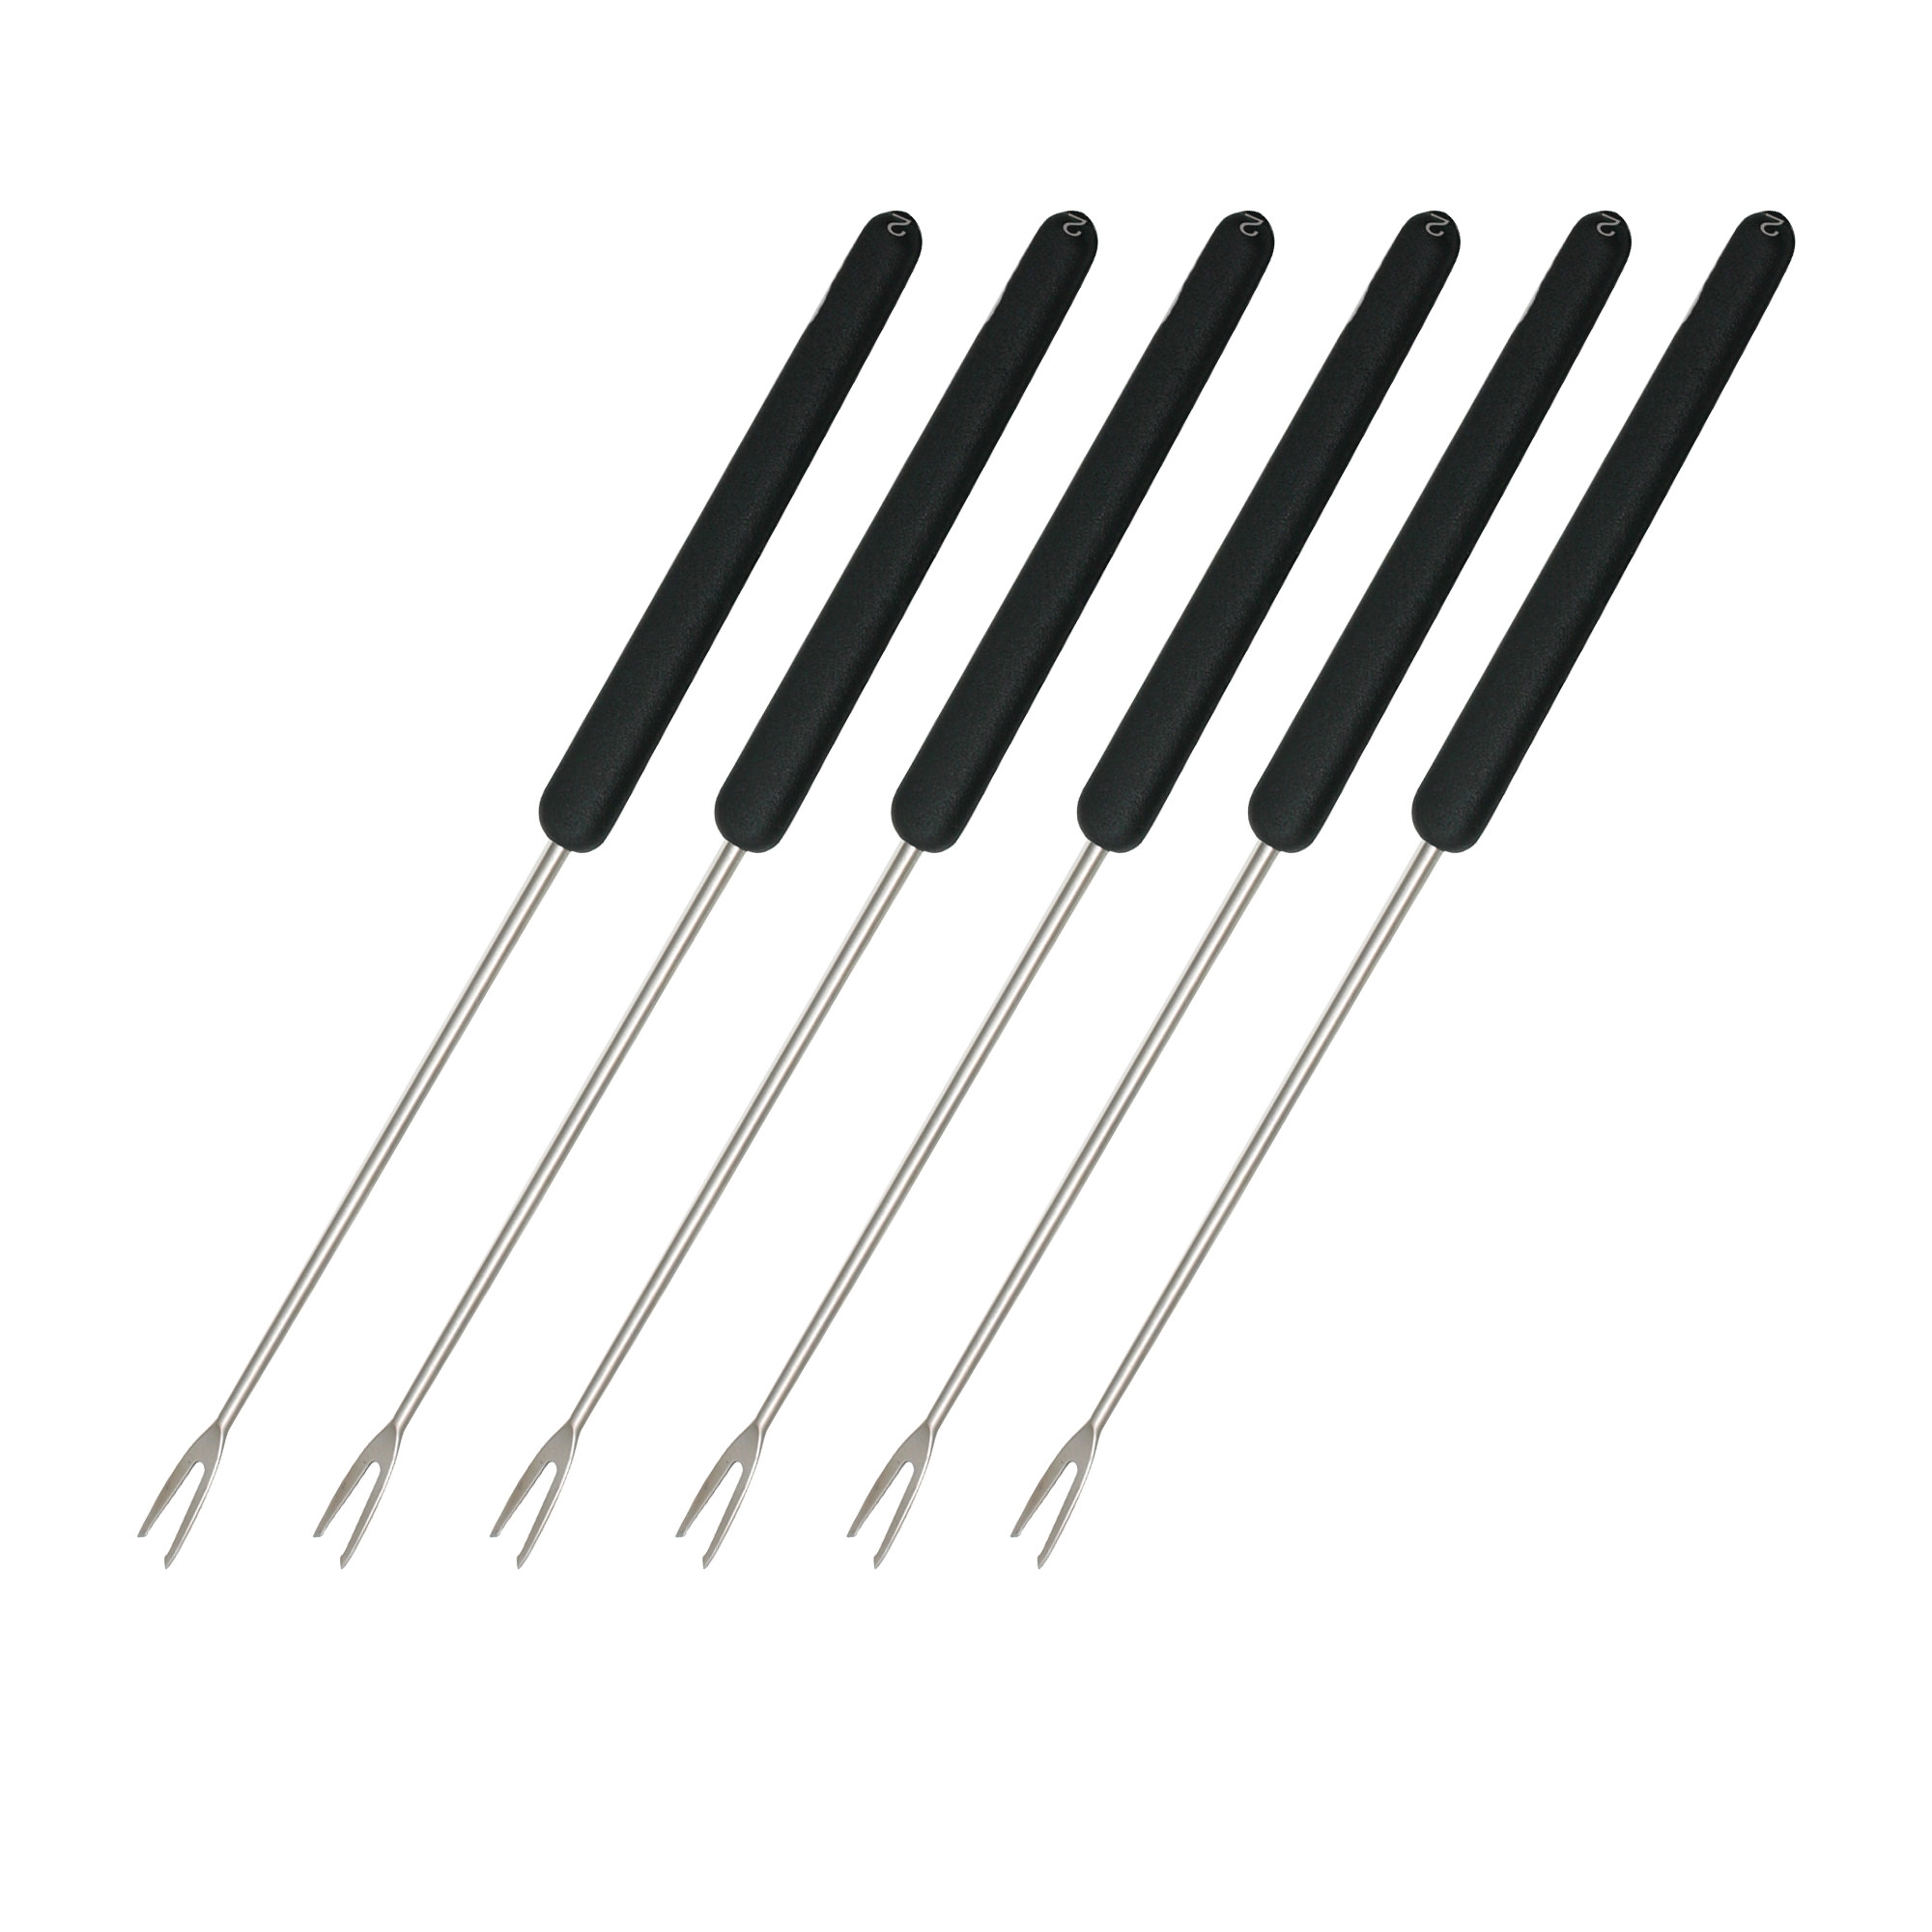 Swissmar Meat Fondue Fork Set of 6 Black Image 1